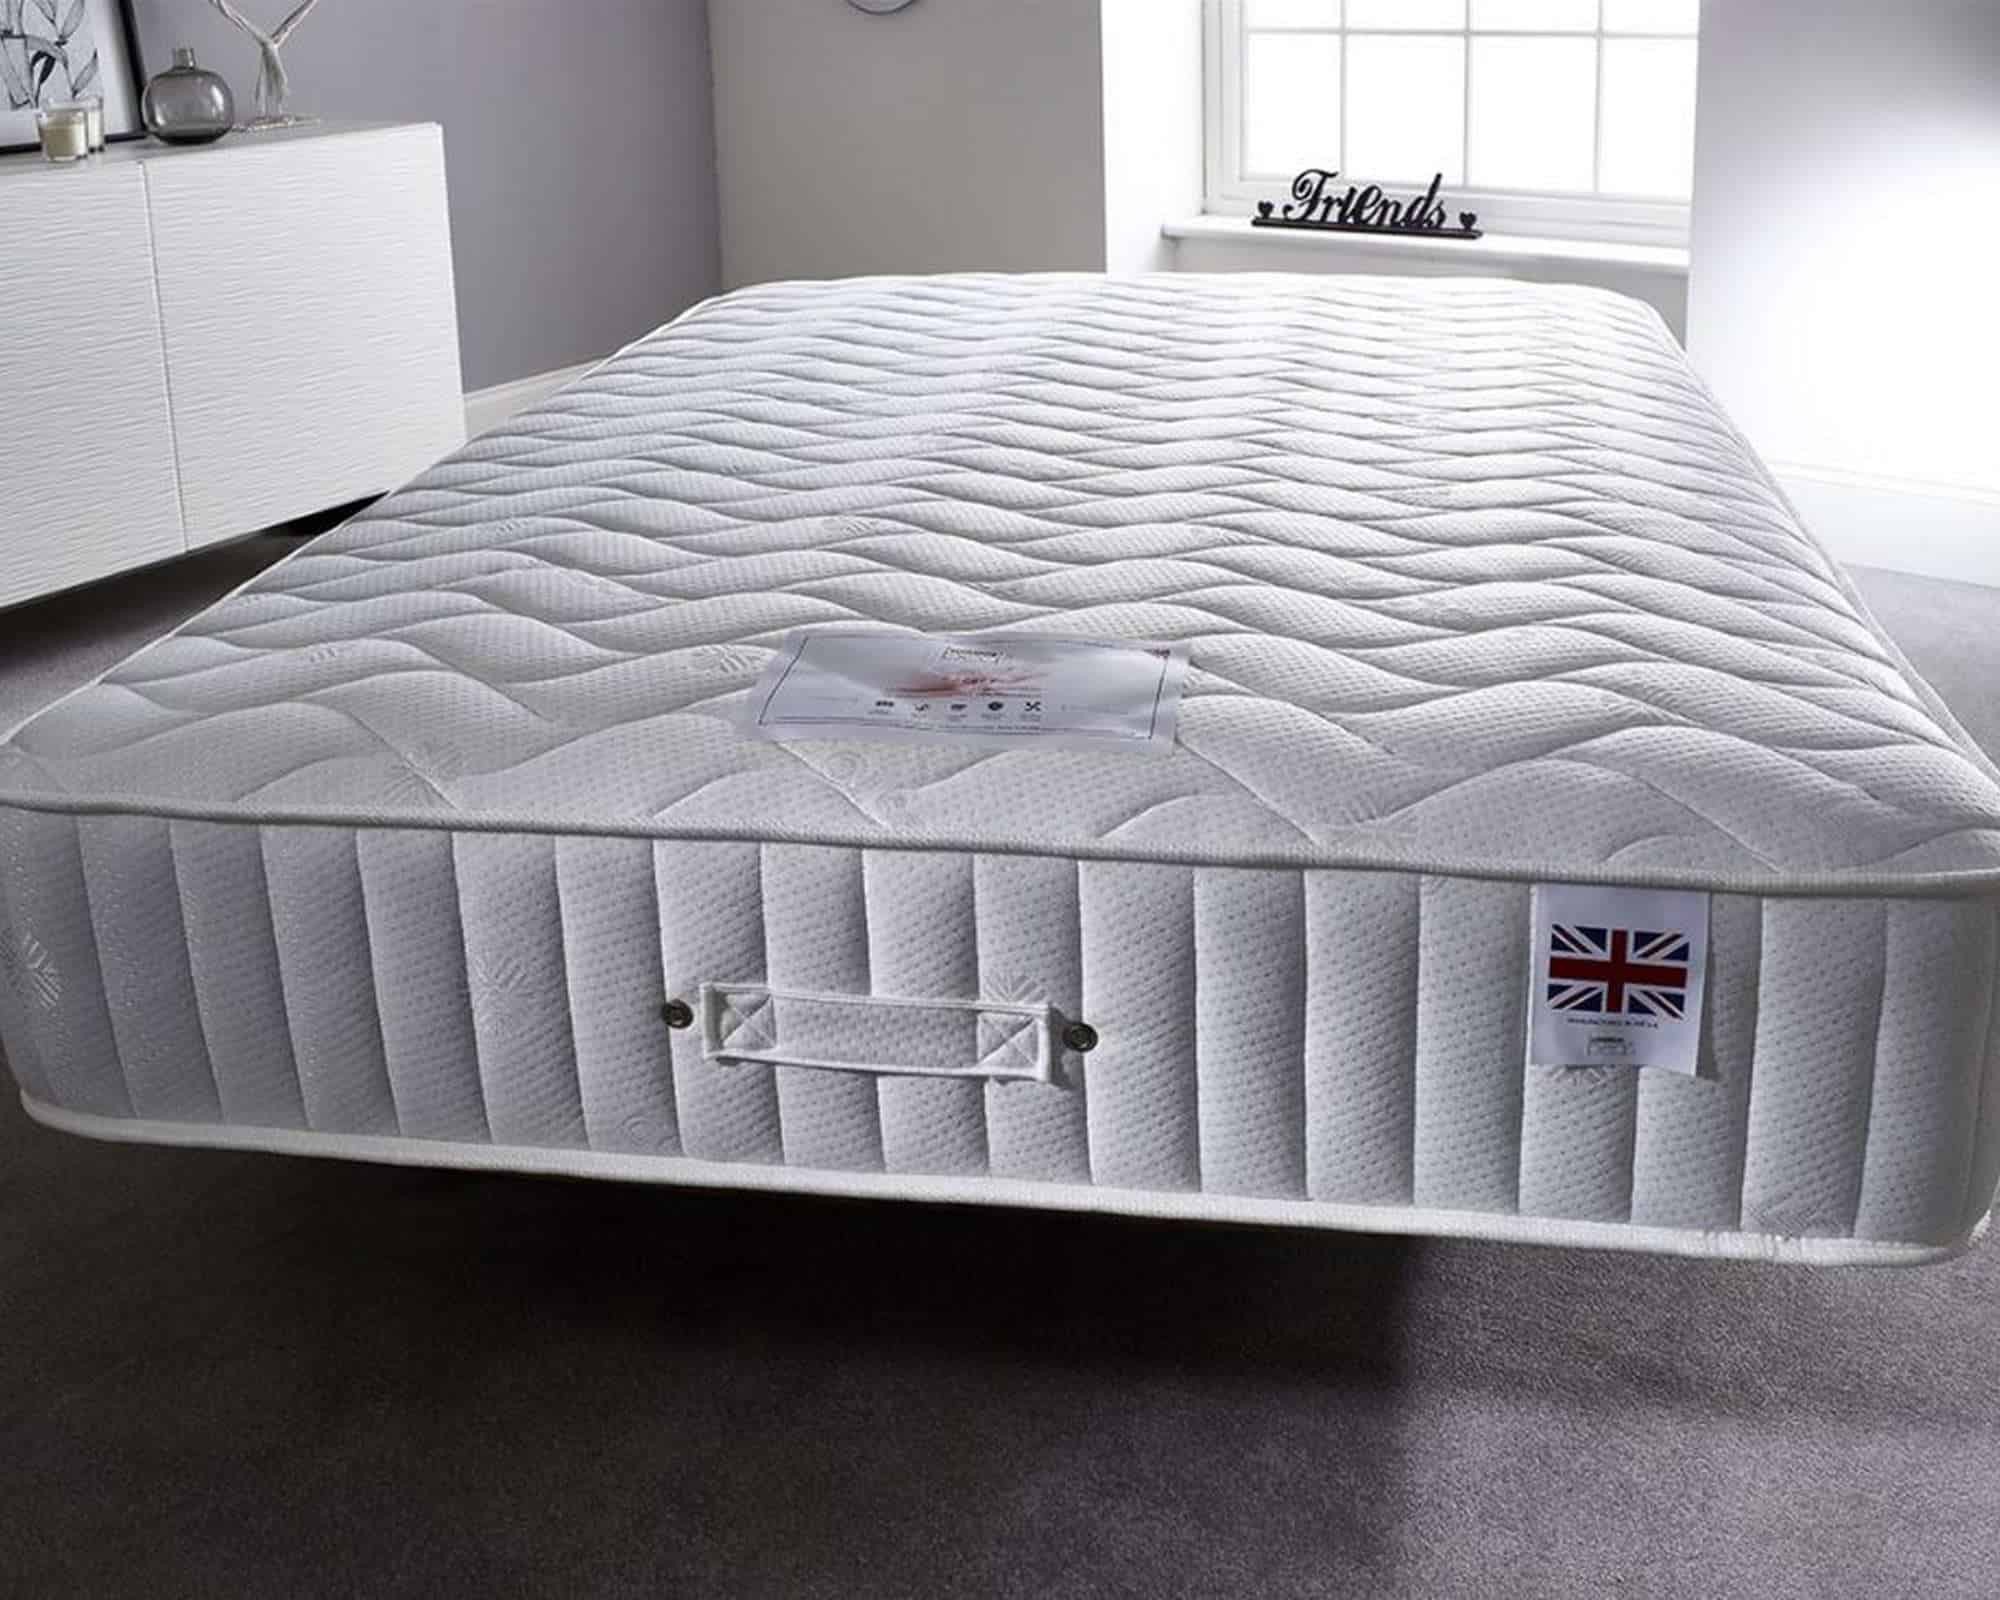 3000 washington pocket mattress review